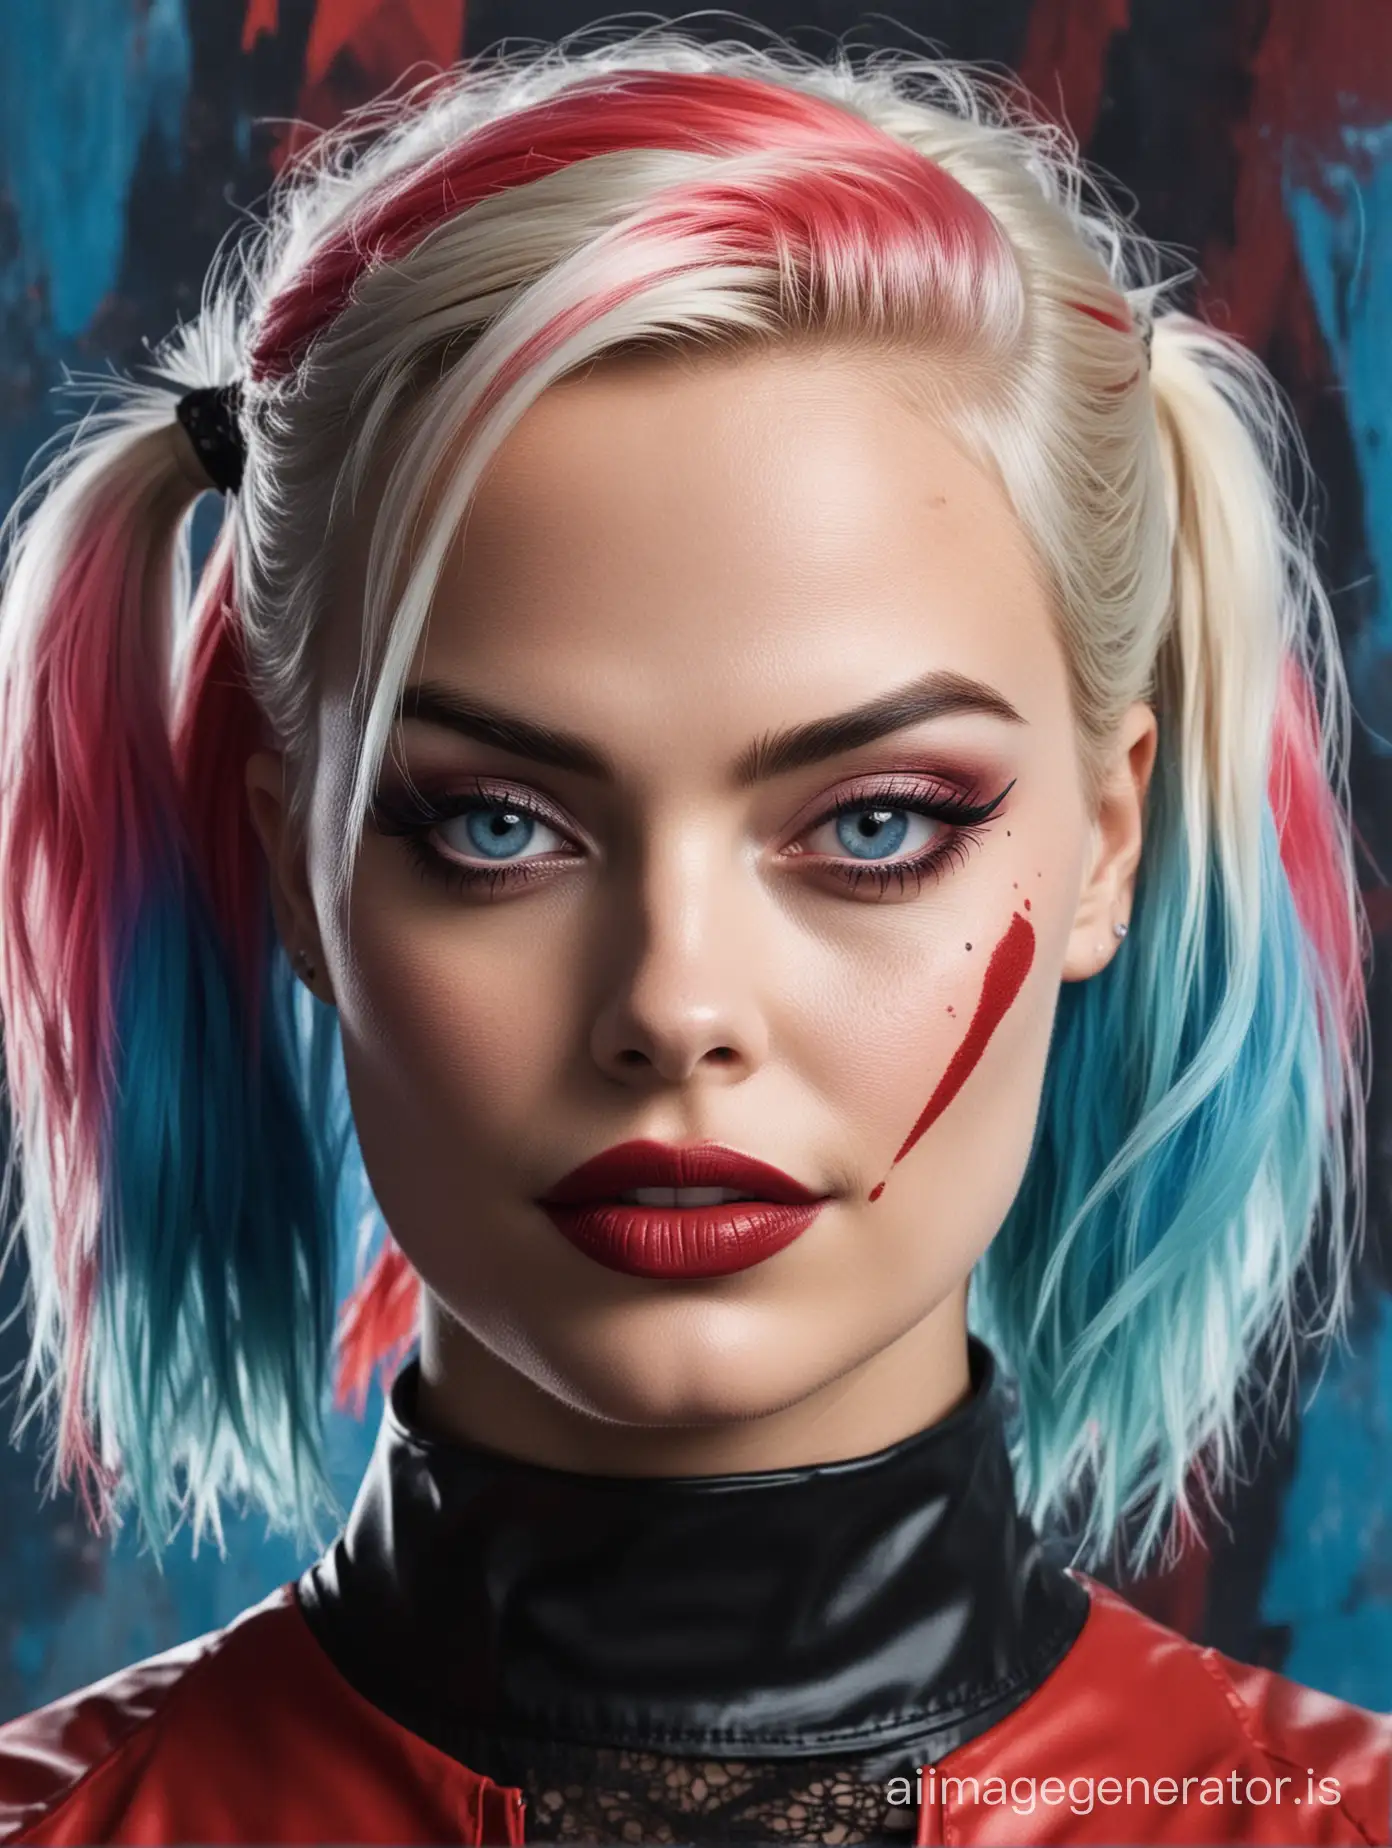 Margot Robbie
Harley Quinn
Red blue hair
Abstract background
Half face
Portrait
